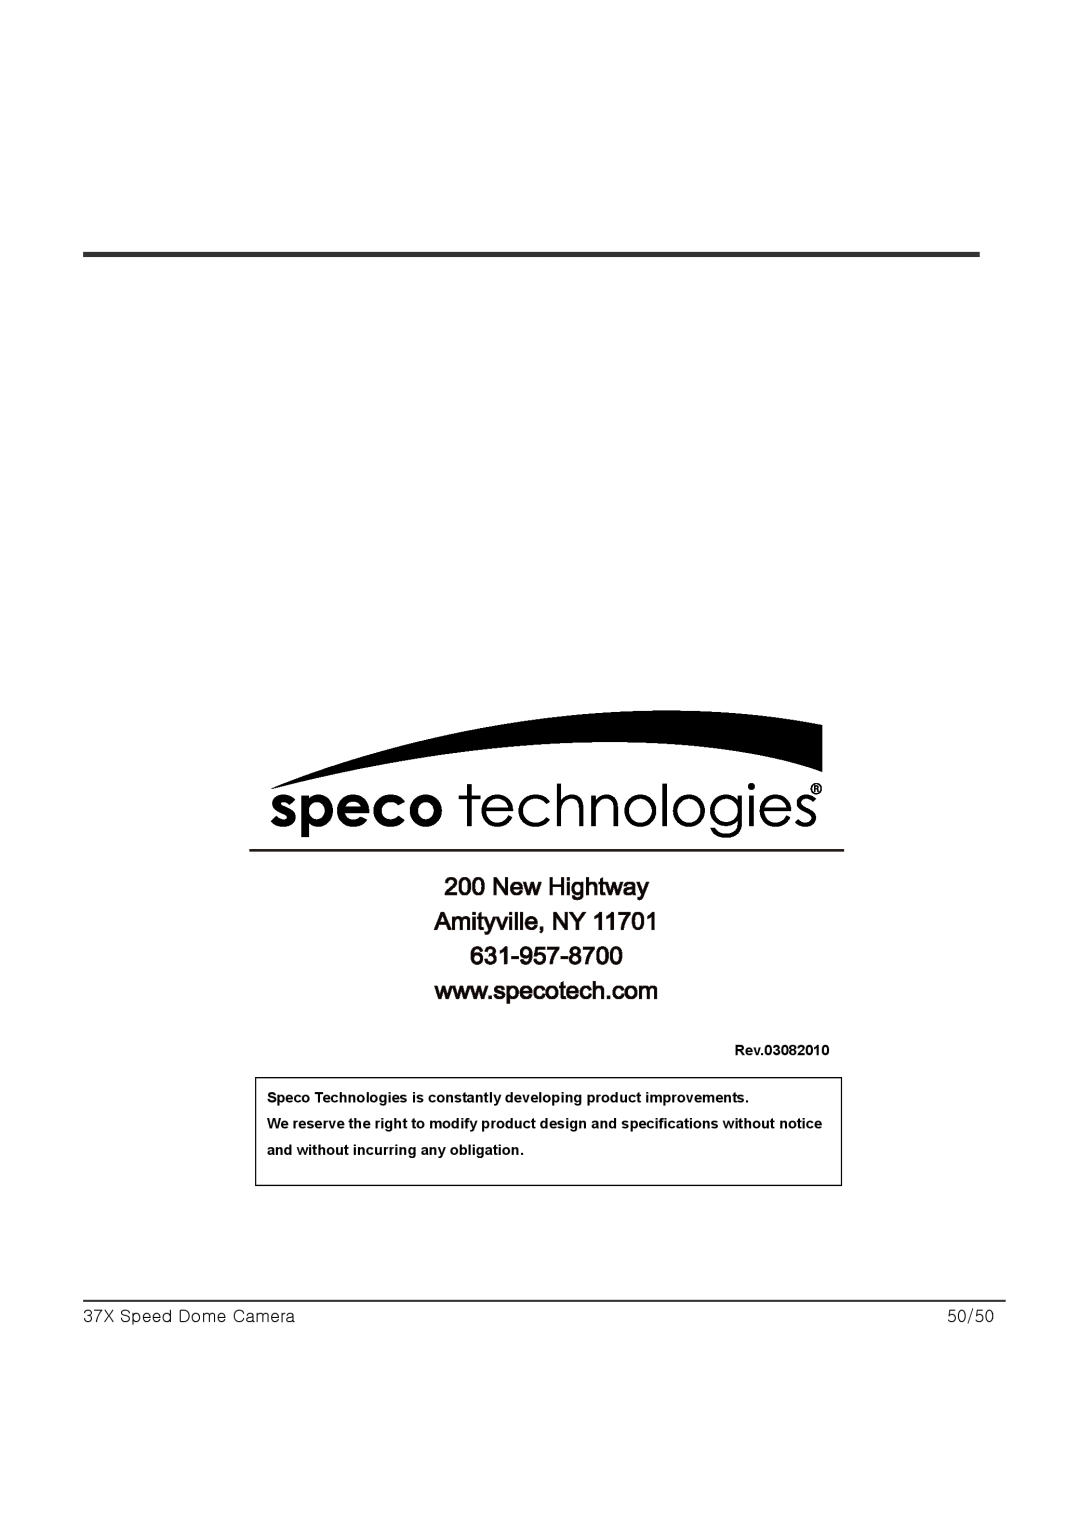 Speco Technologies SIPSD37X, HTSD37X New Hightway Amityville, NY 631-957-8700, 37X Speed Dome Camera, 50/50, Rev.03082010 